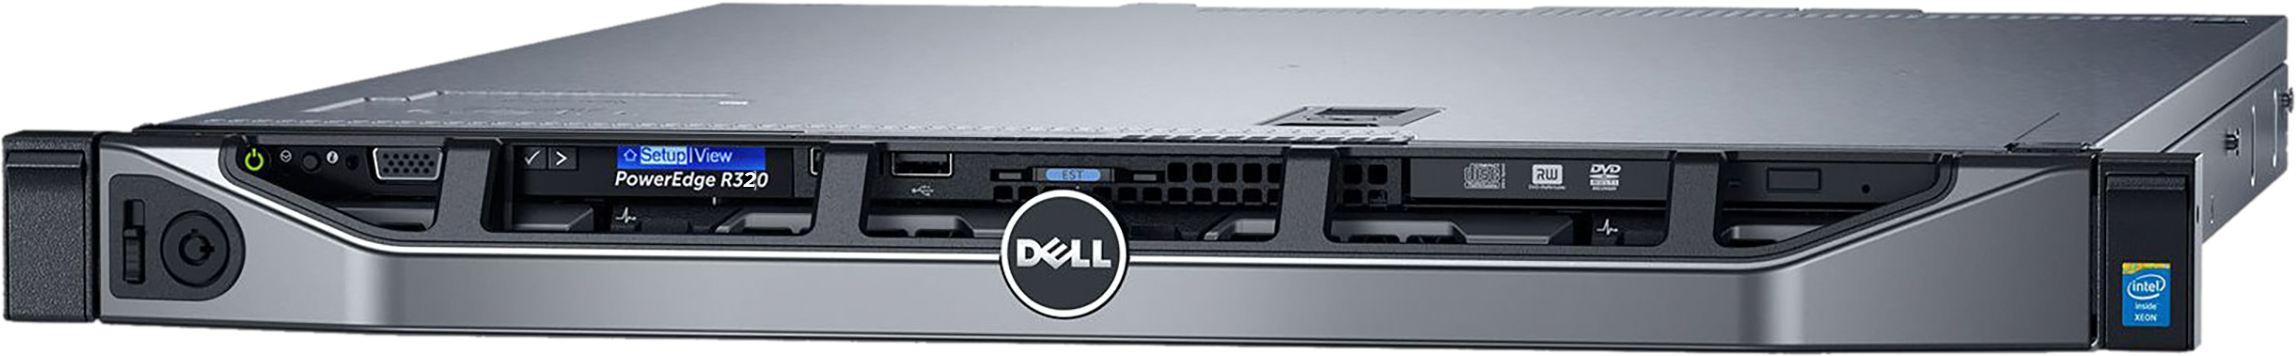 Аренда физического сервера DELL R320 / E5-2430 v2 / 16 GB RAM / 2 x 2 TB HDD / H310